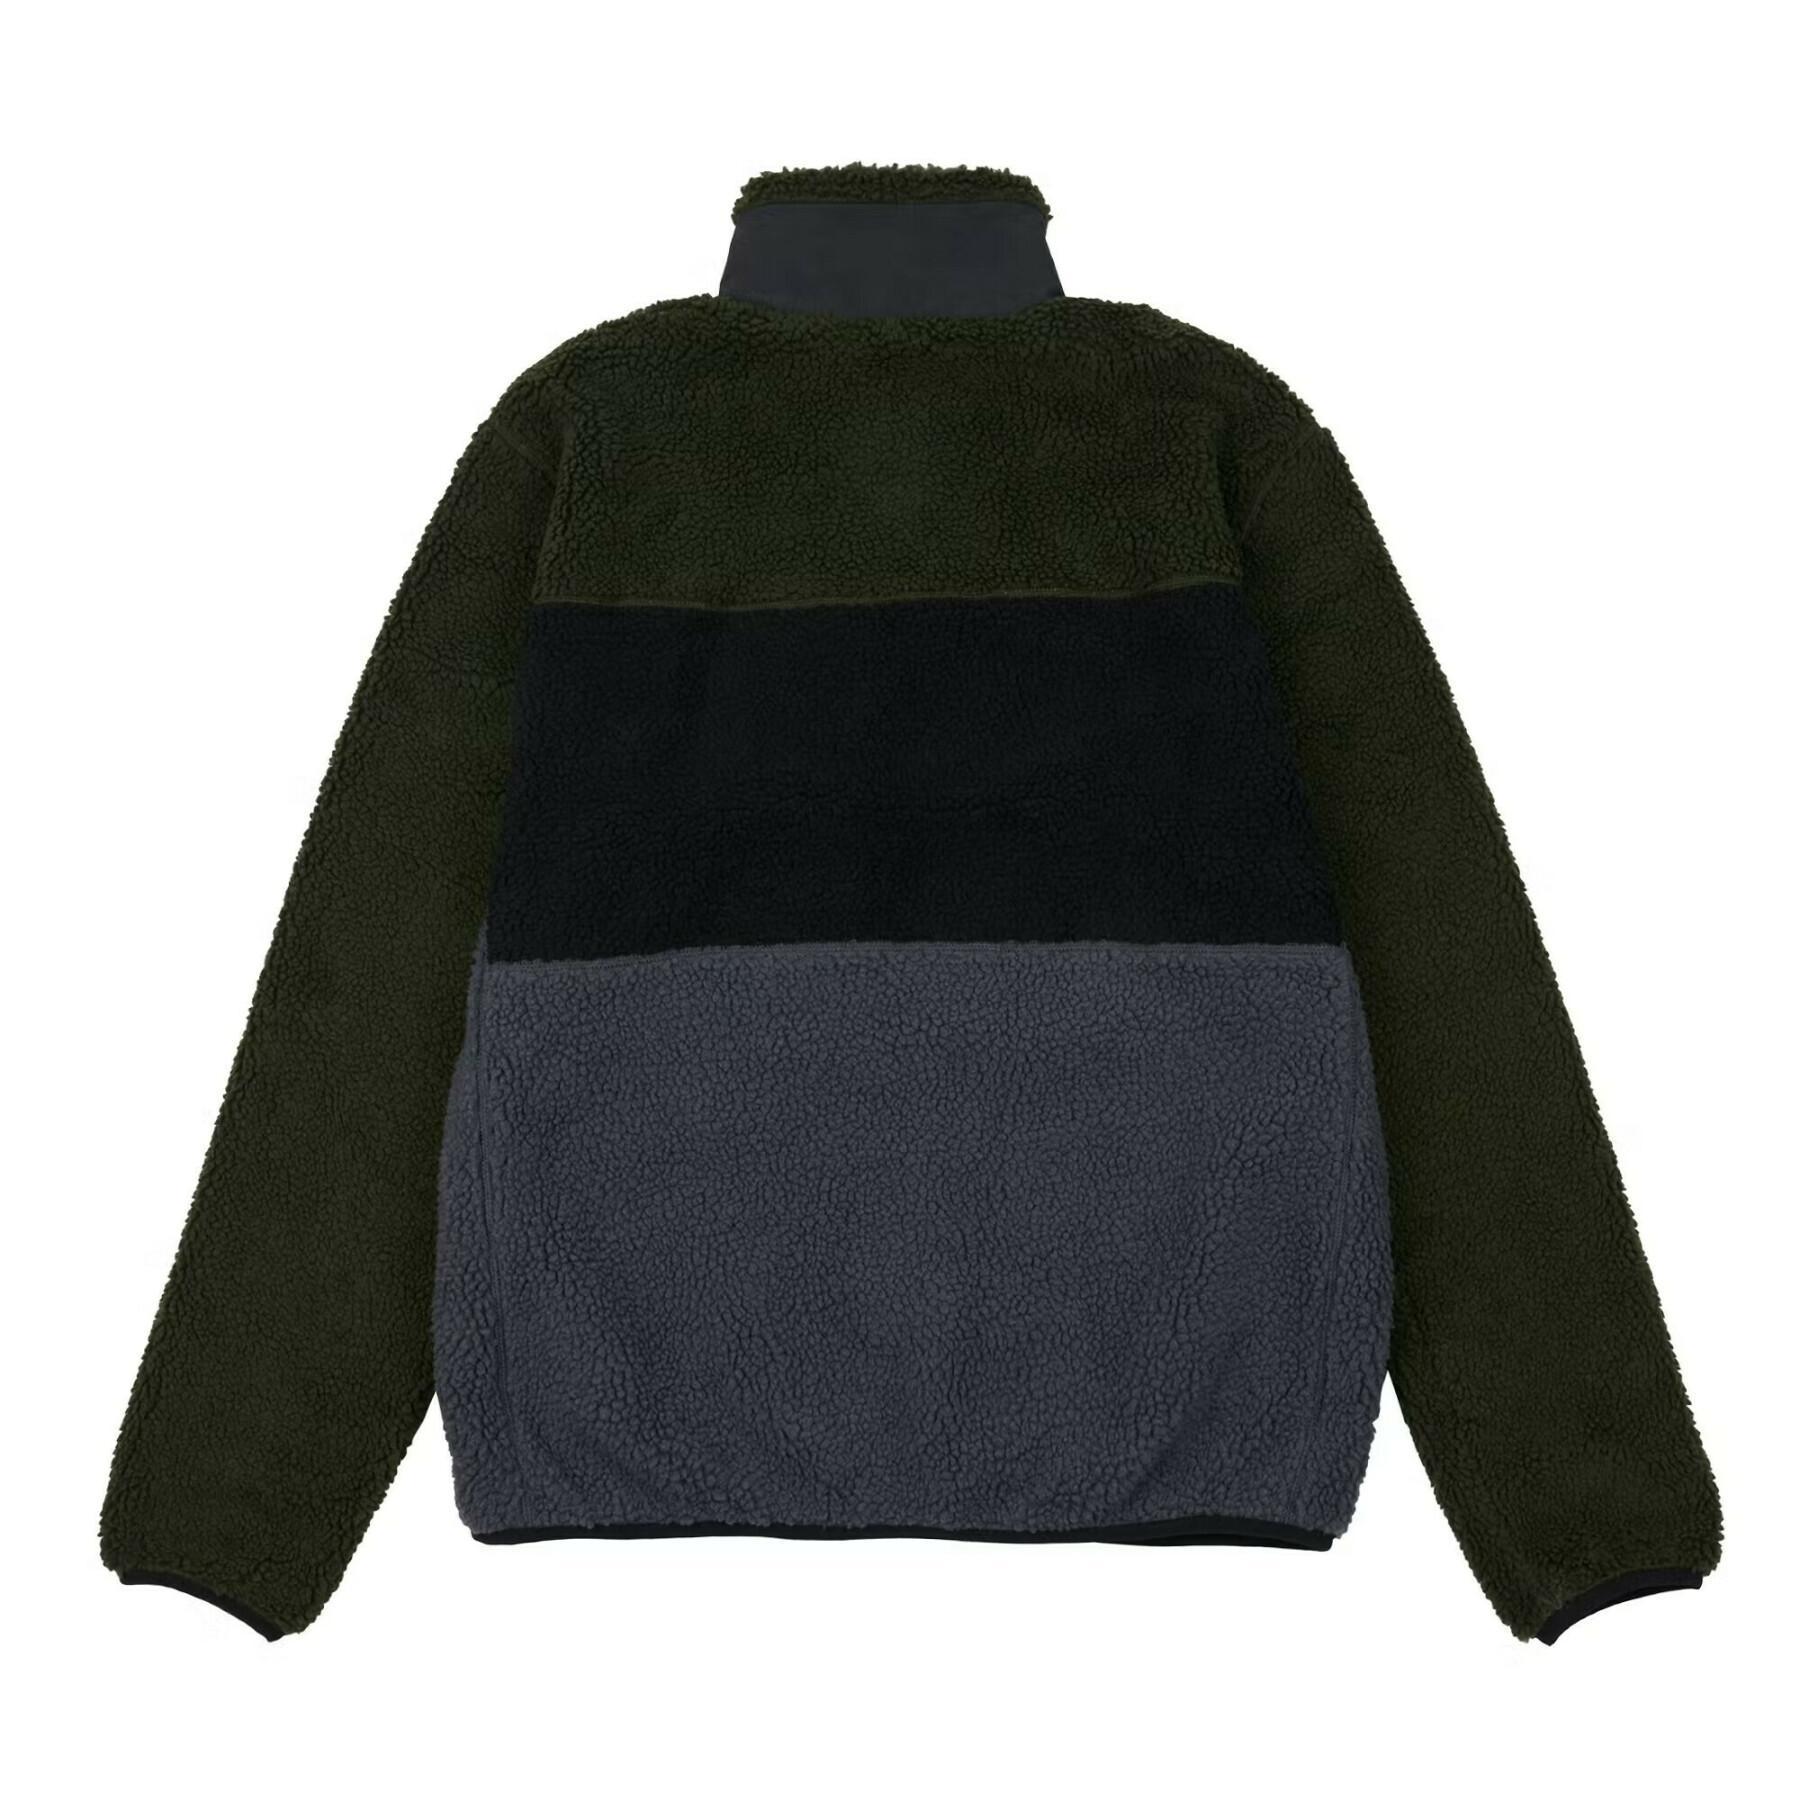 Zipped jacket Penfield bear colour block borg thru